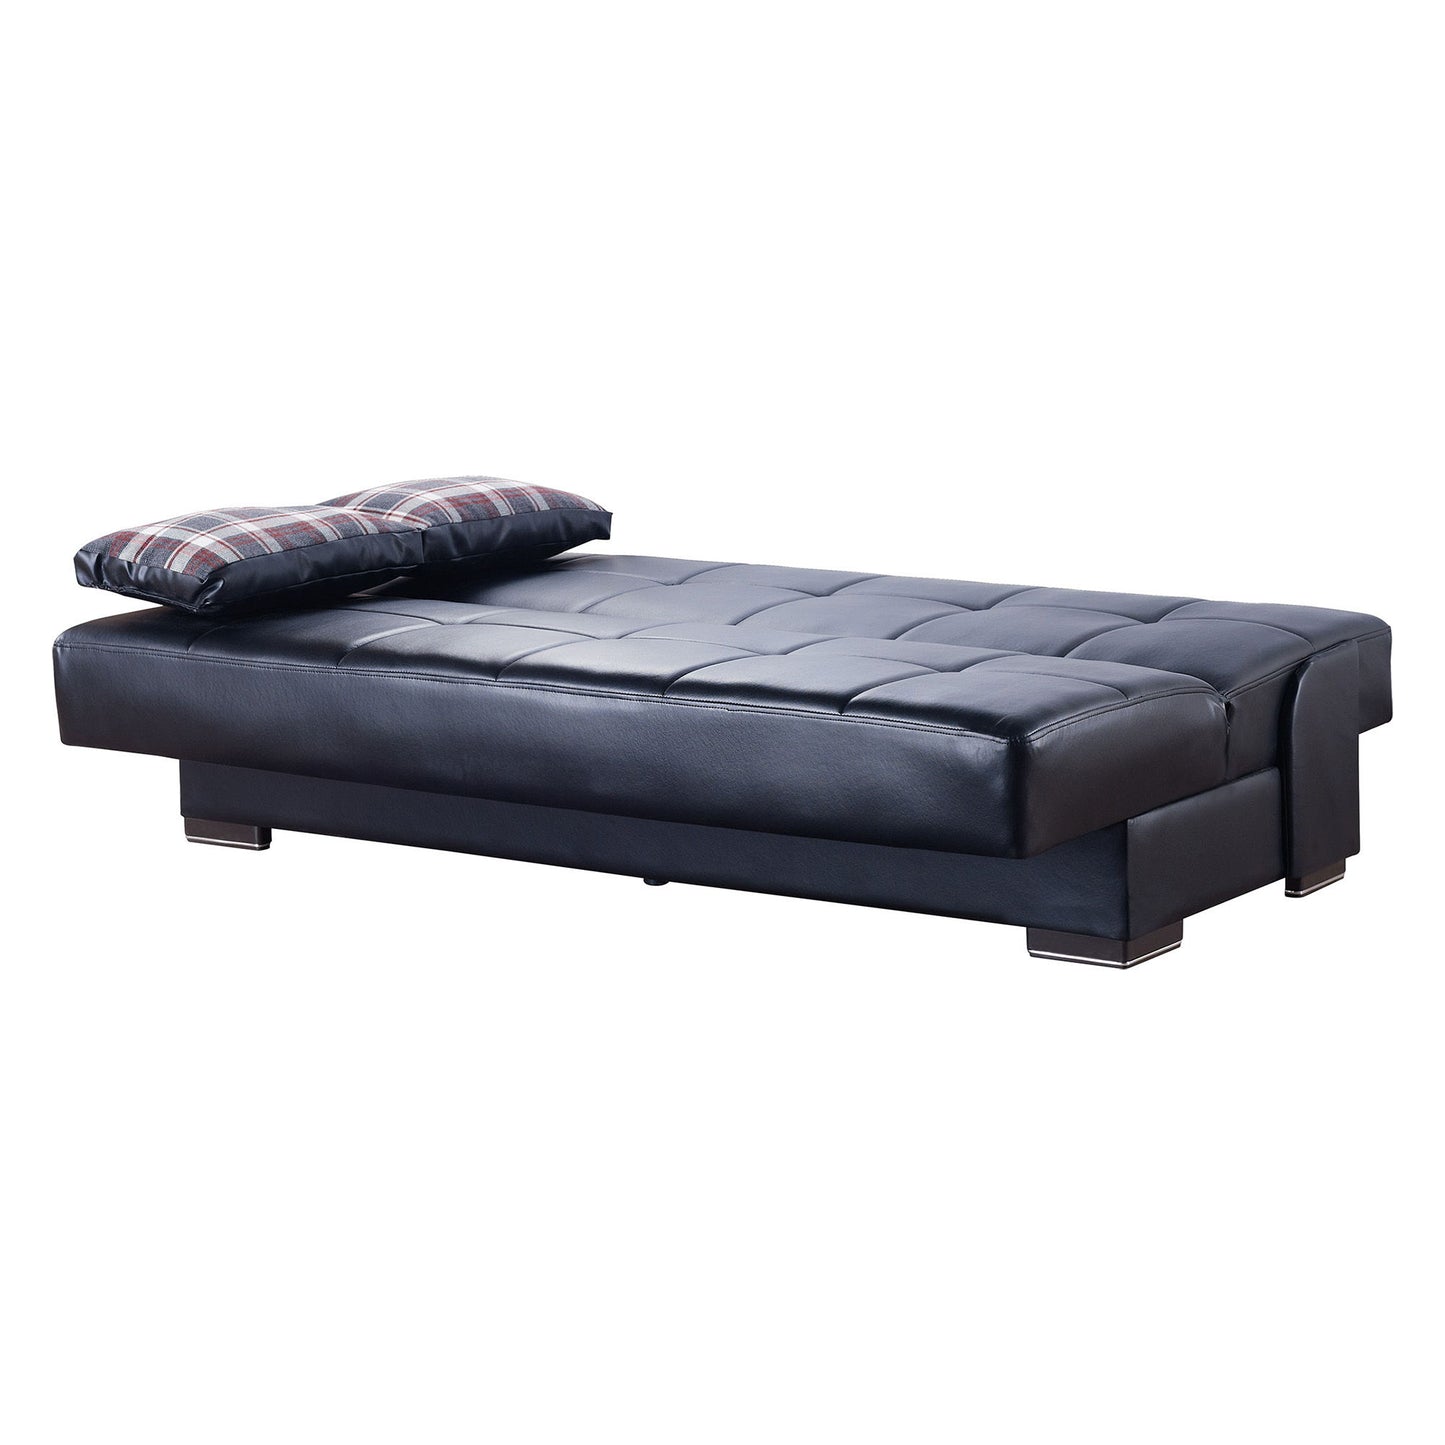 Ottomanson Solo - Convertible Sofa Bed With Storage